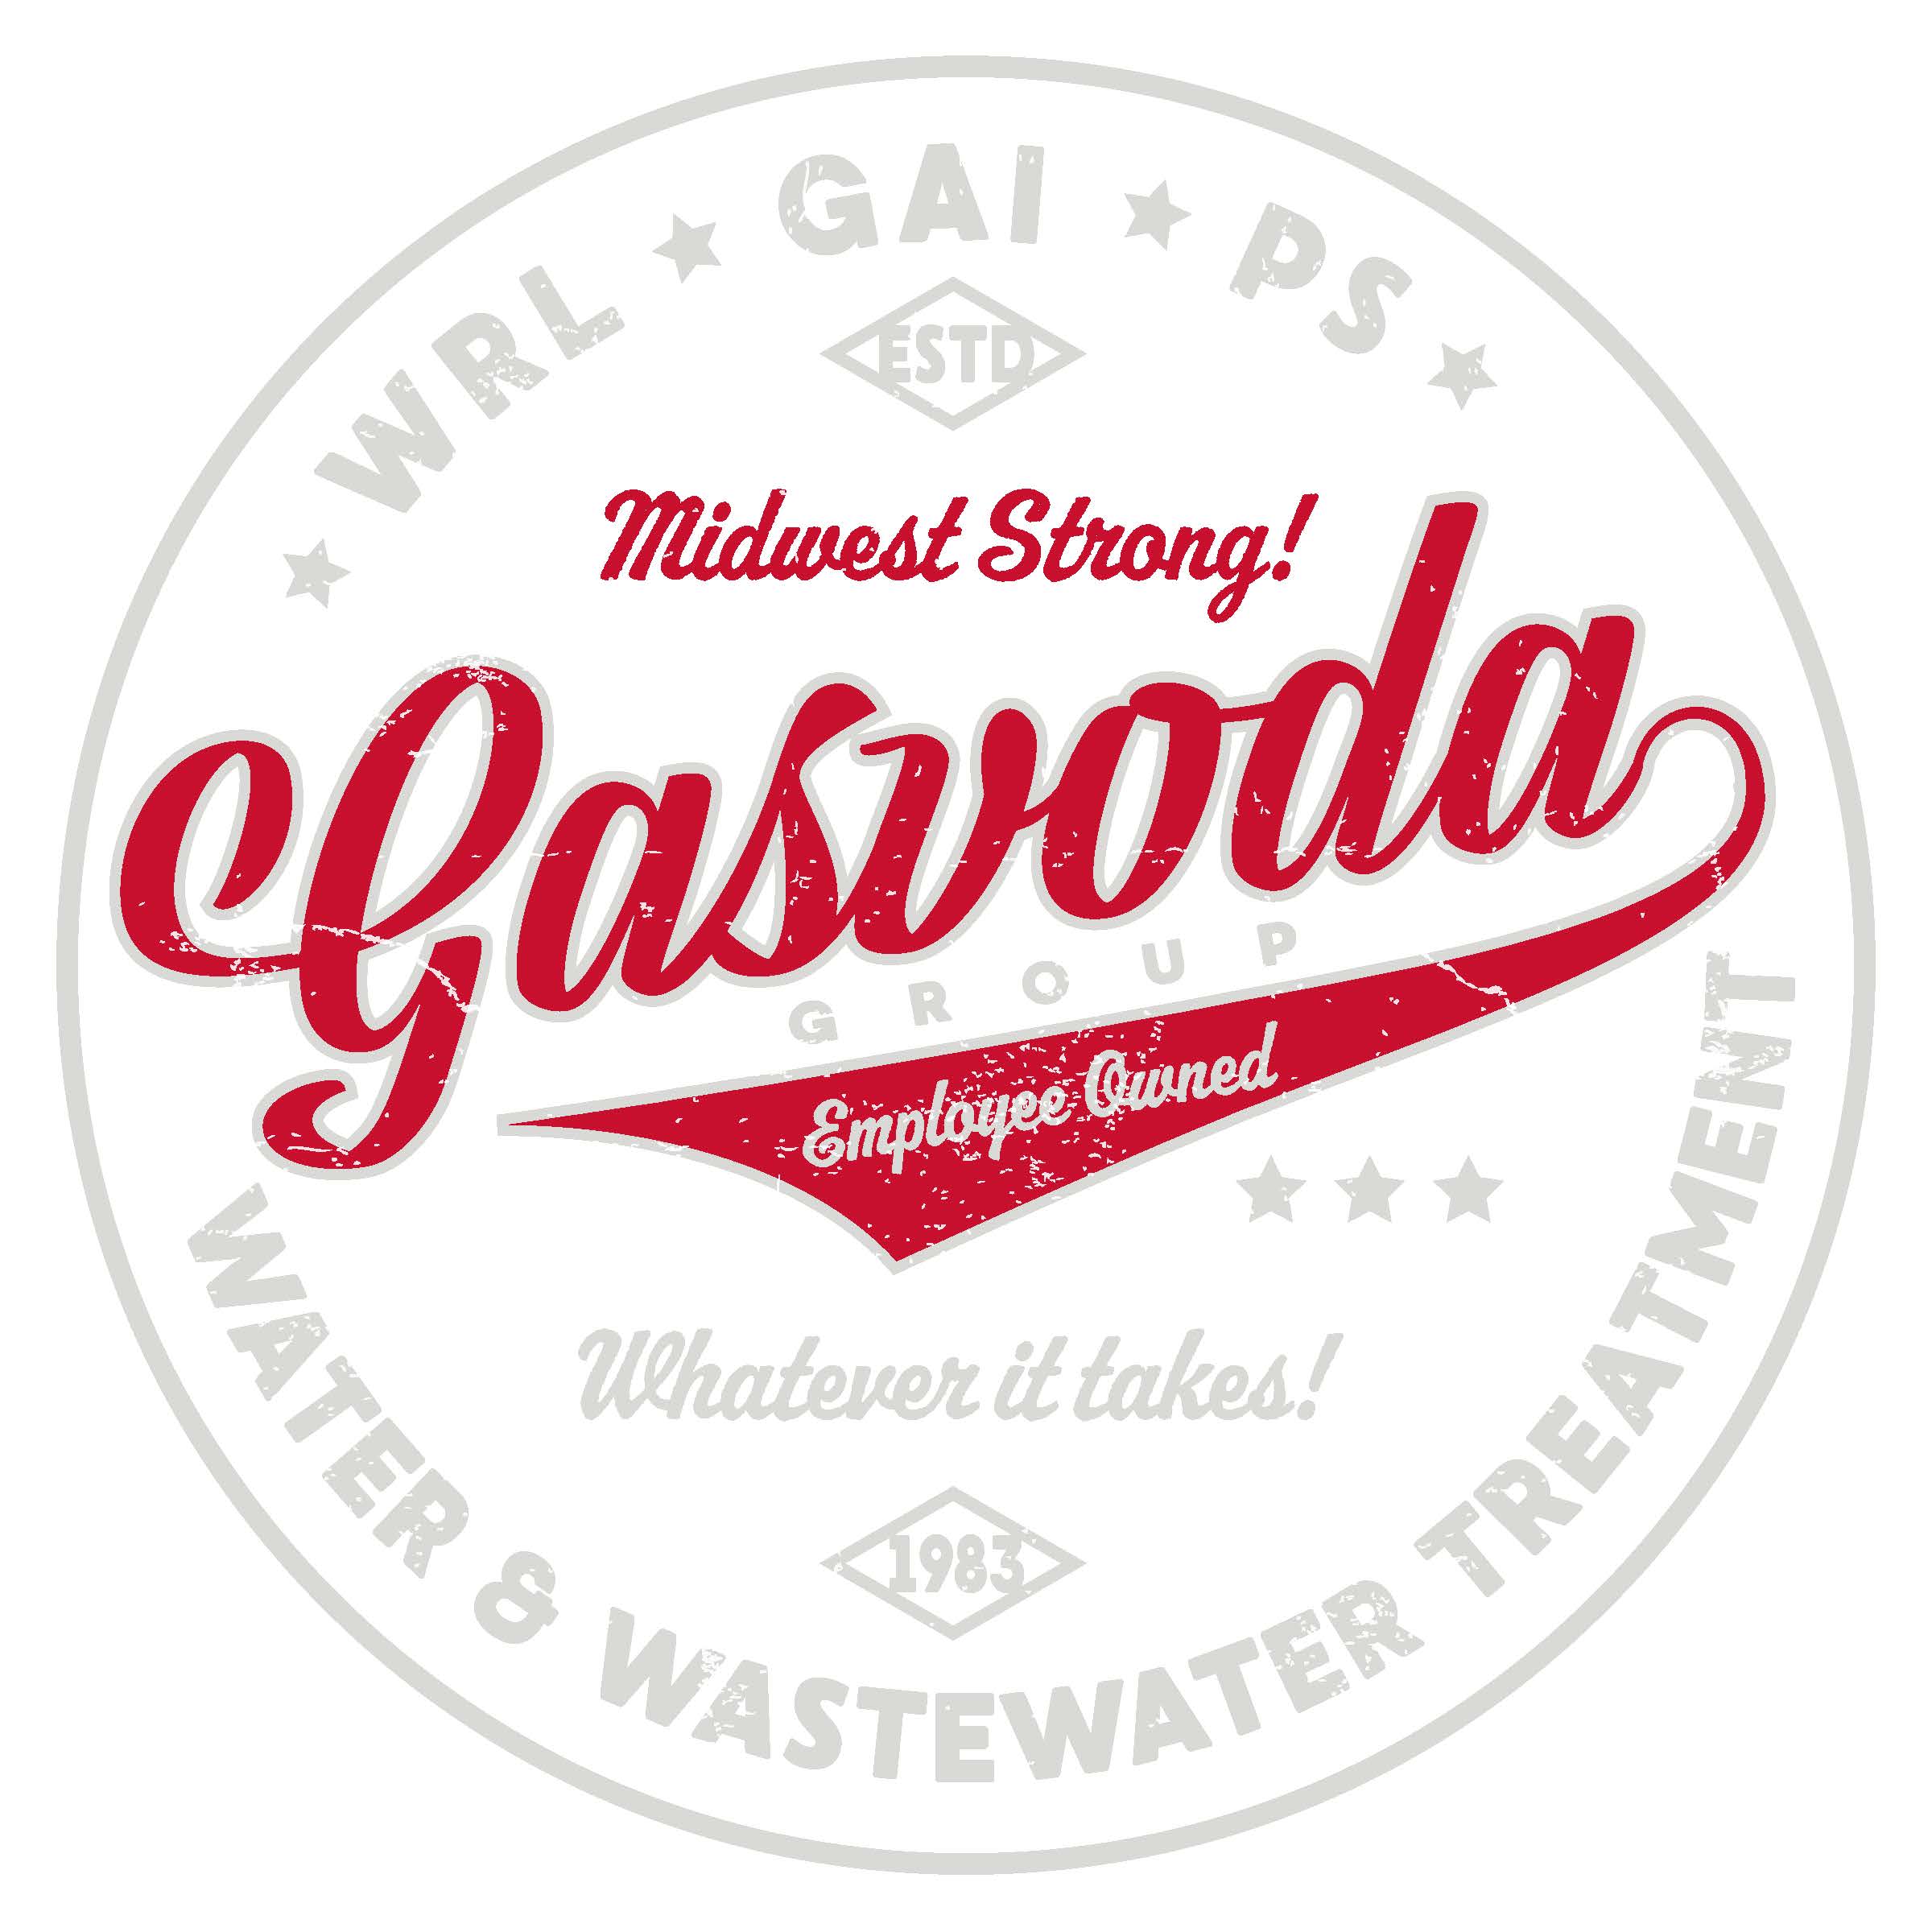 Gasvoda Group